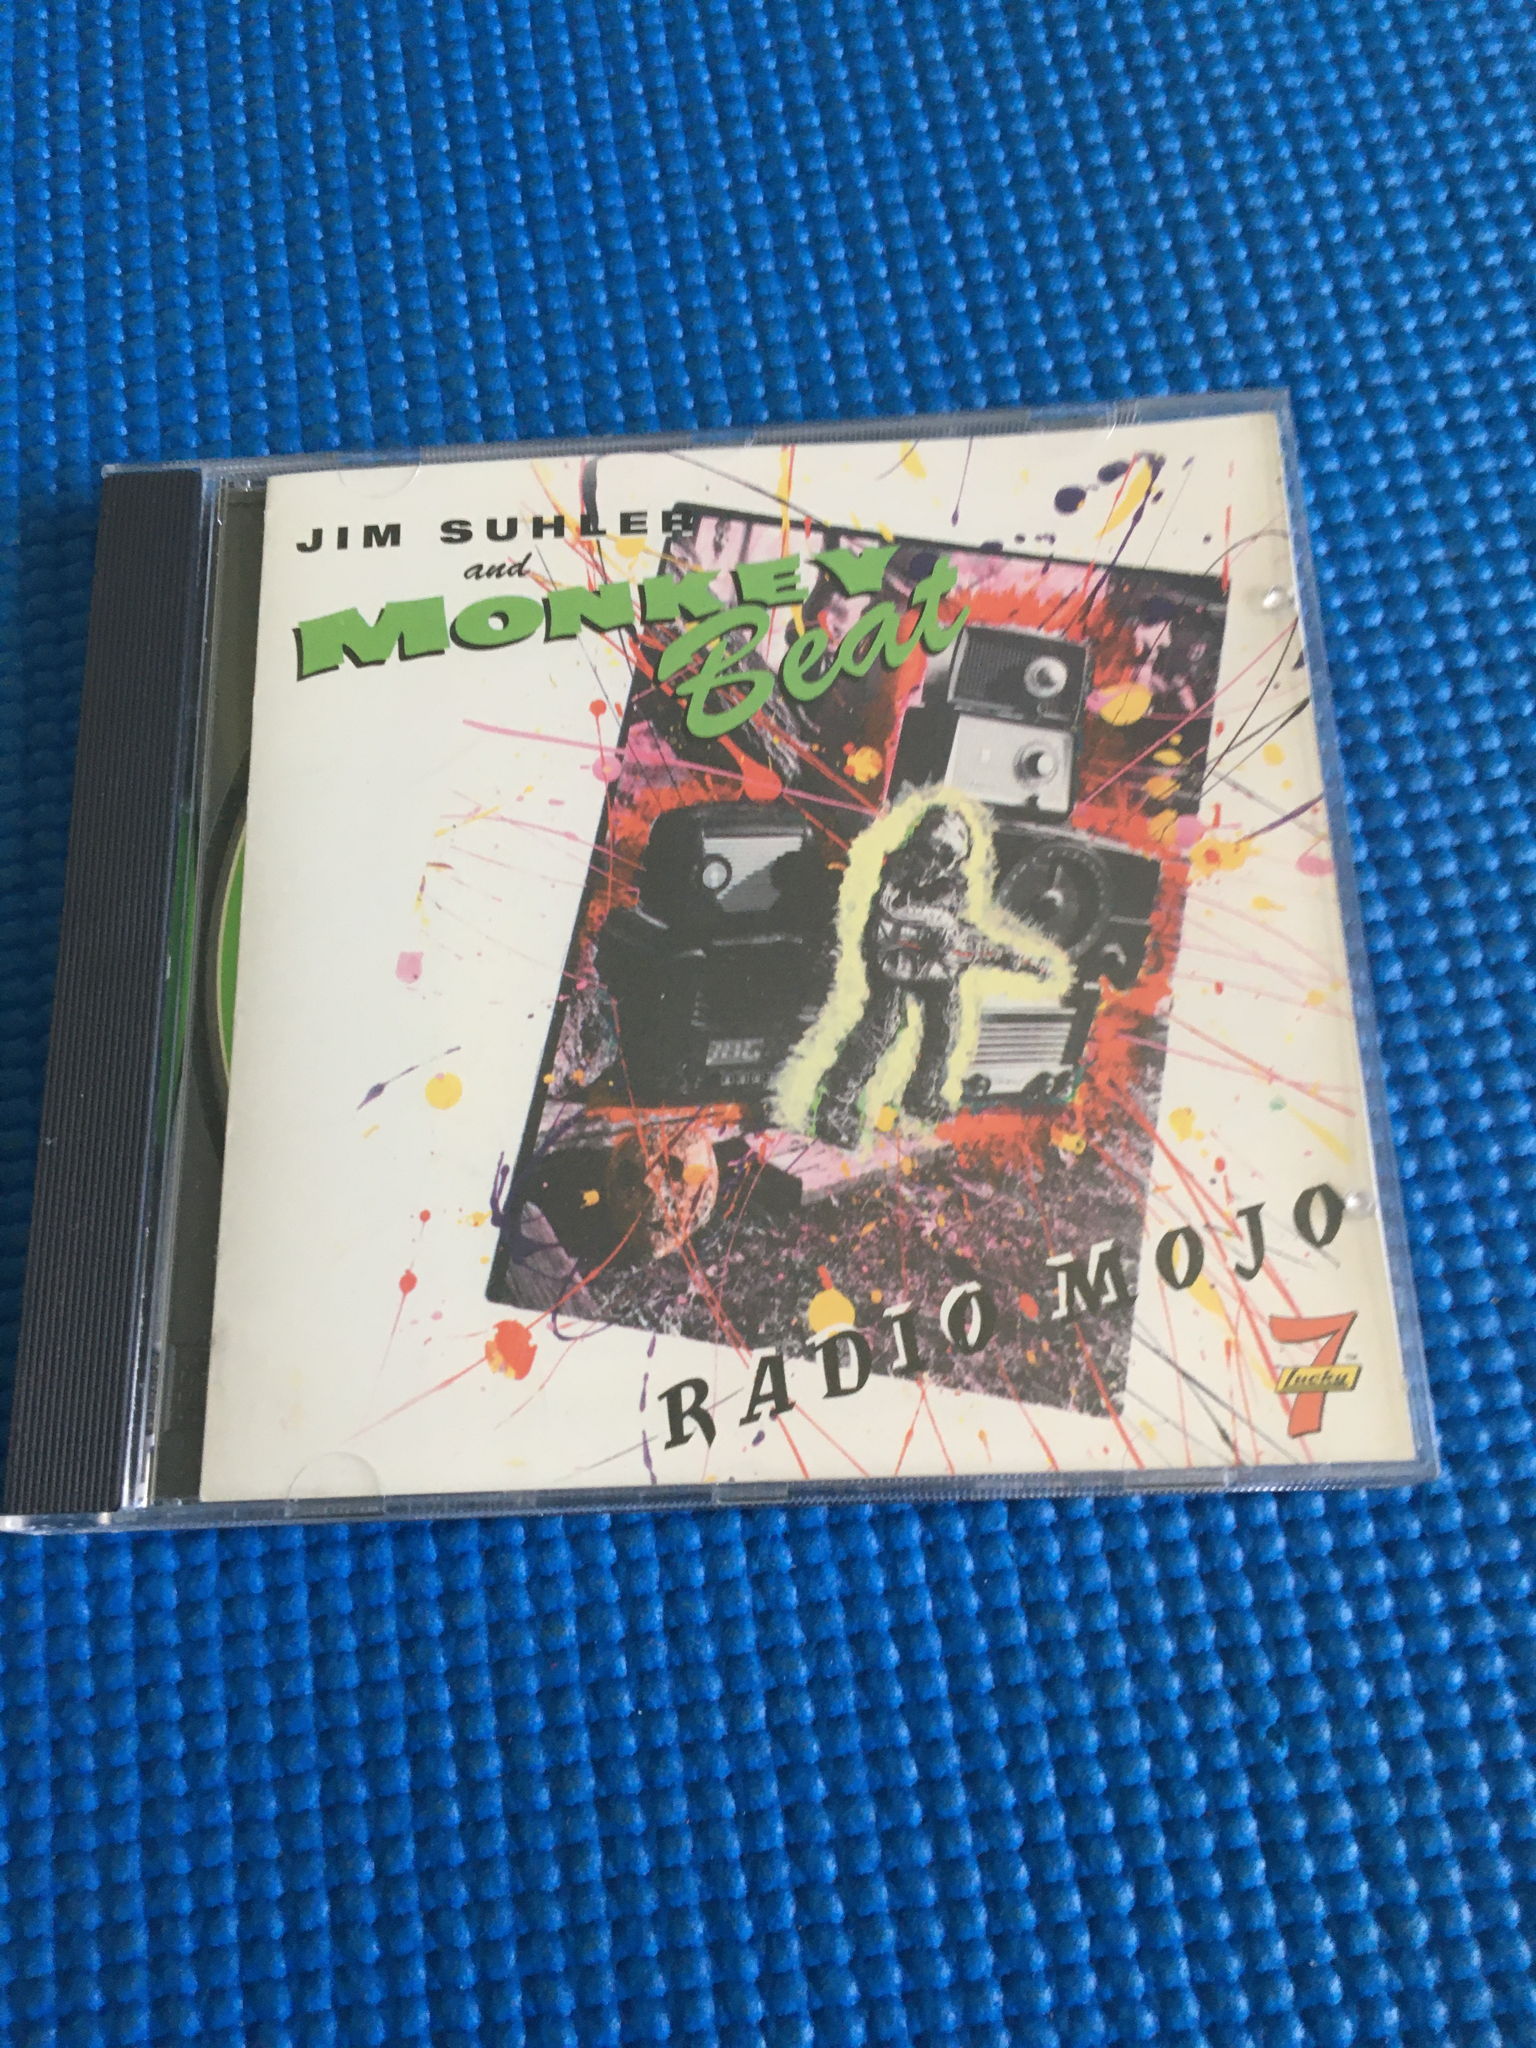 Jim Suhler and Monkey beat Radio mojo cd 1993 lucky 7 lbl